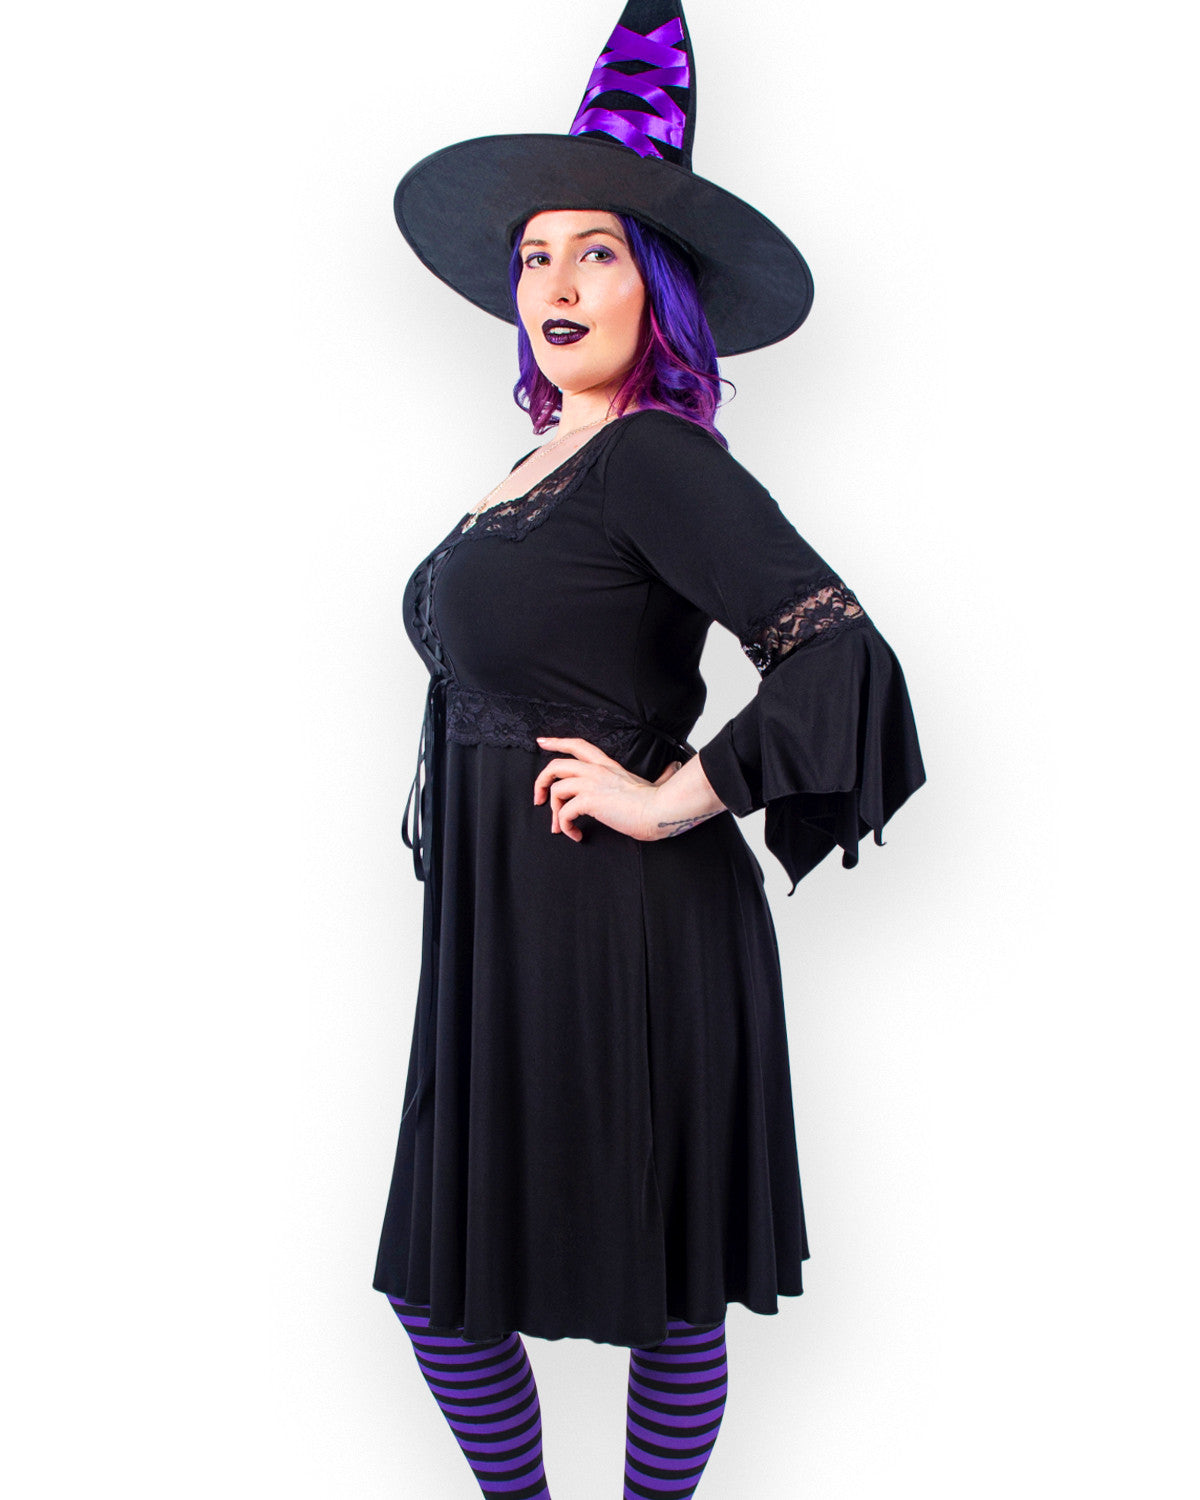 Sorceress Witch Costume with Black Renaissance Dress, Purple